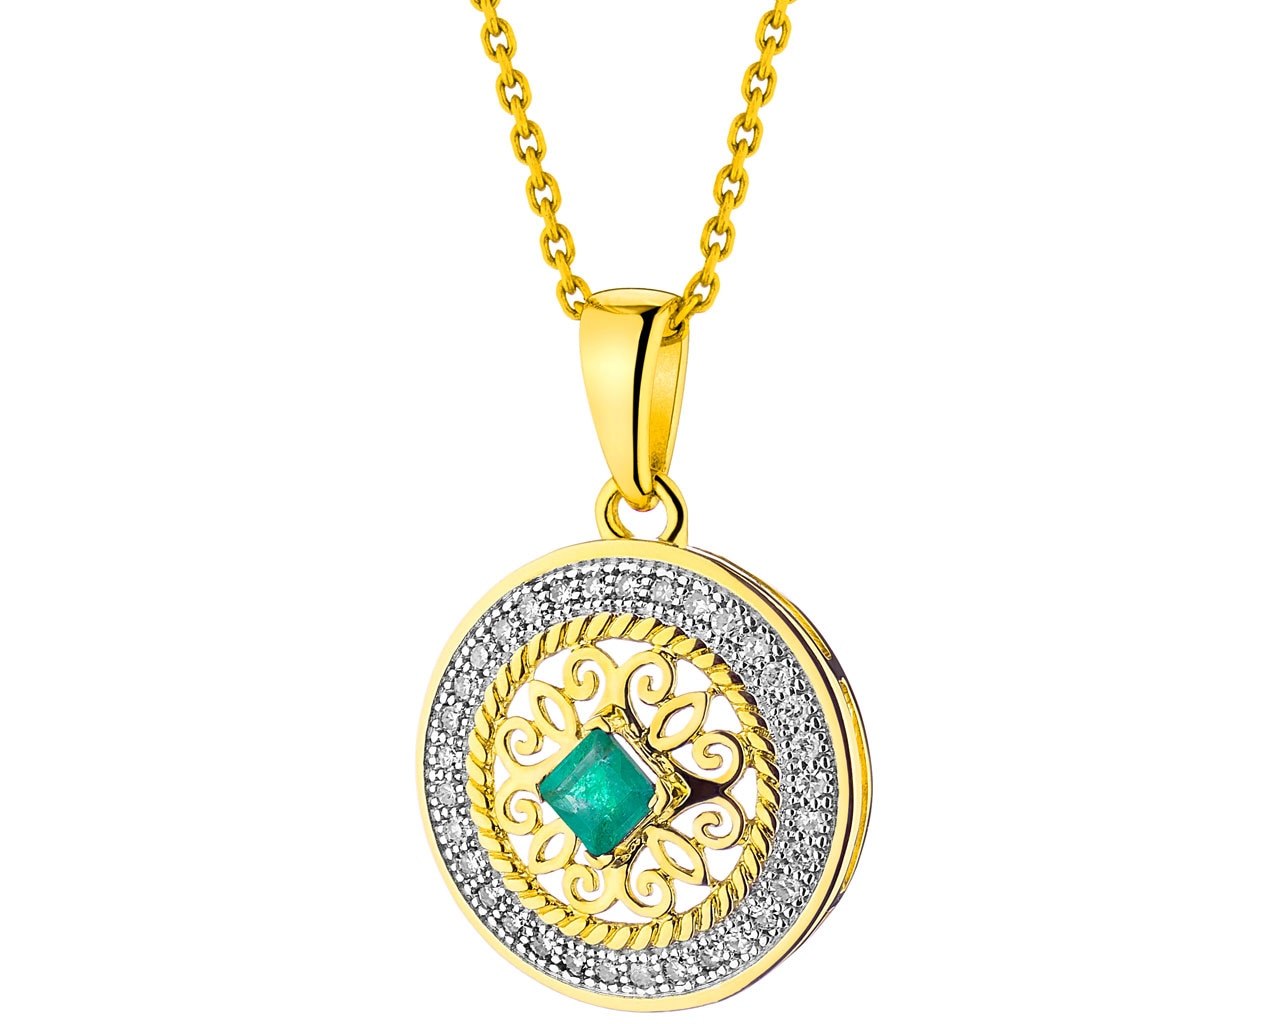 Zlatý přívěsek s diamanty a smaragdem - rozeta 0,09 ct - ryzost 585